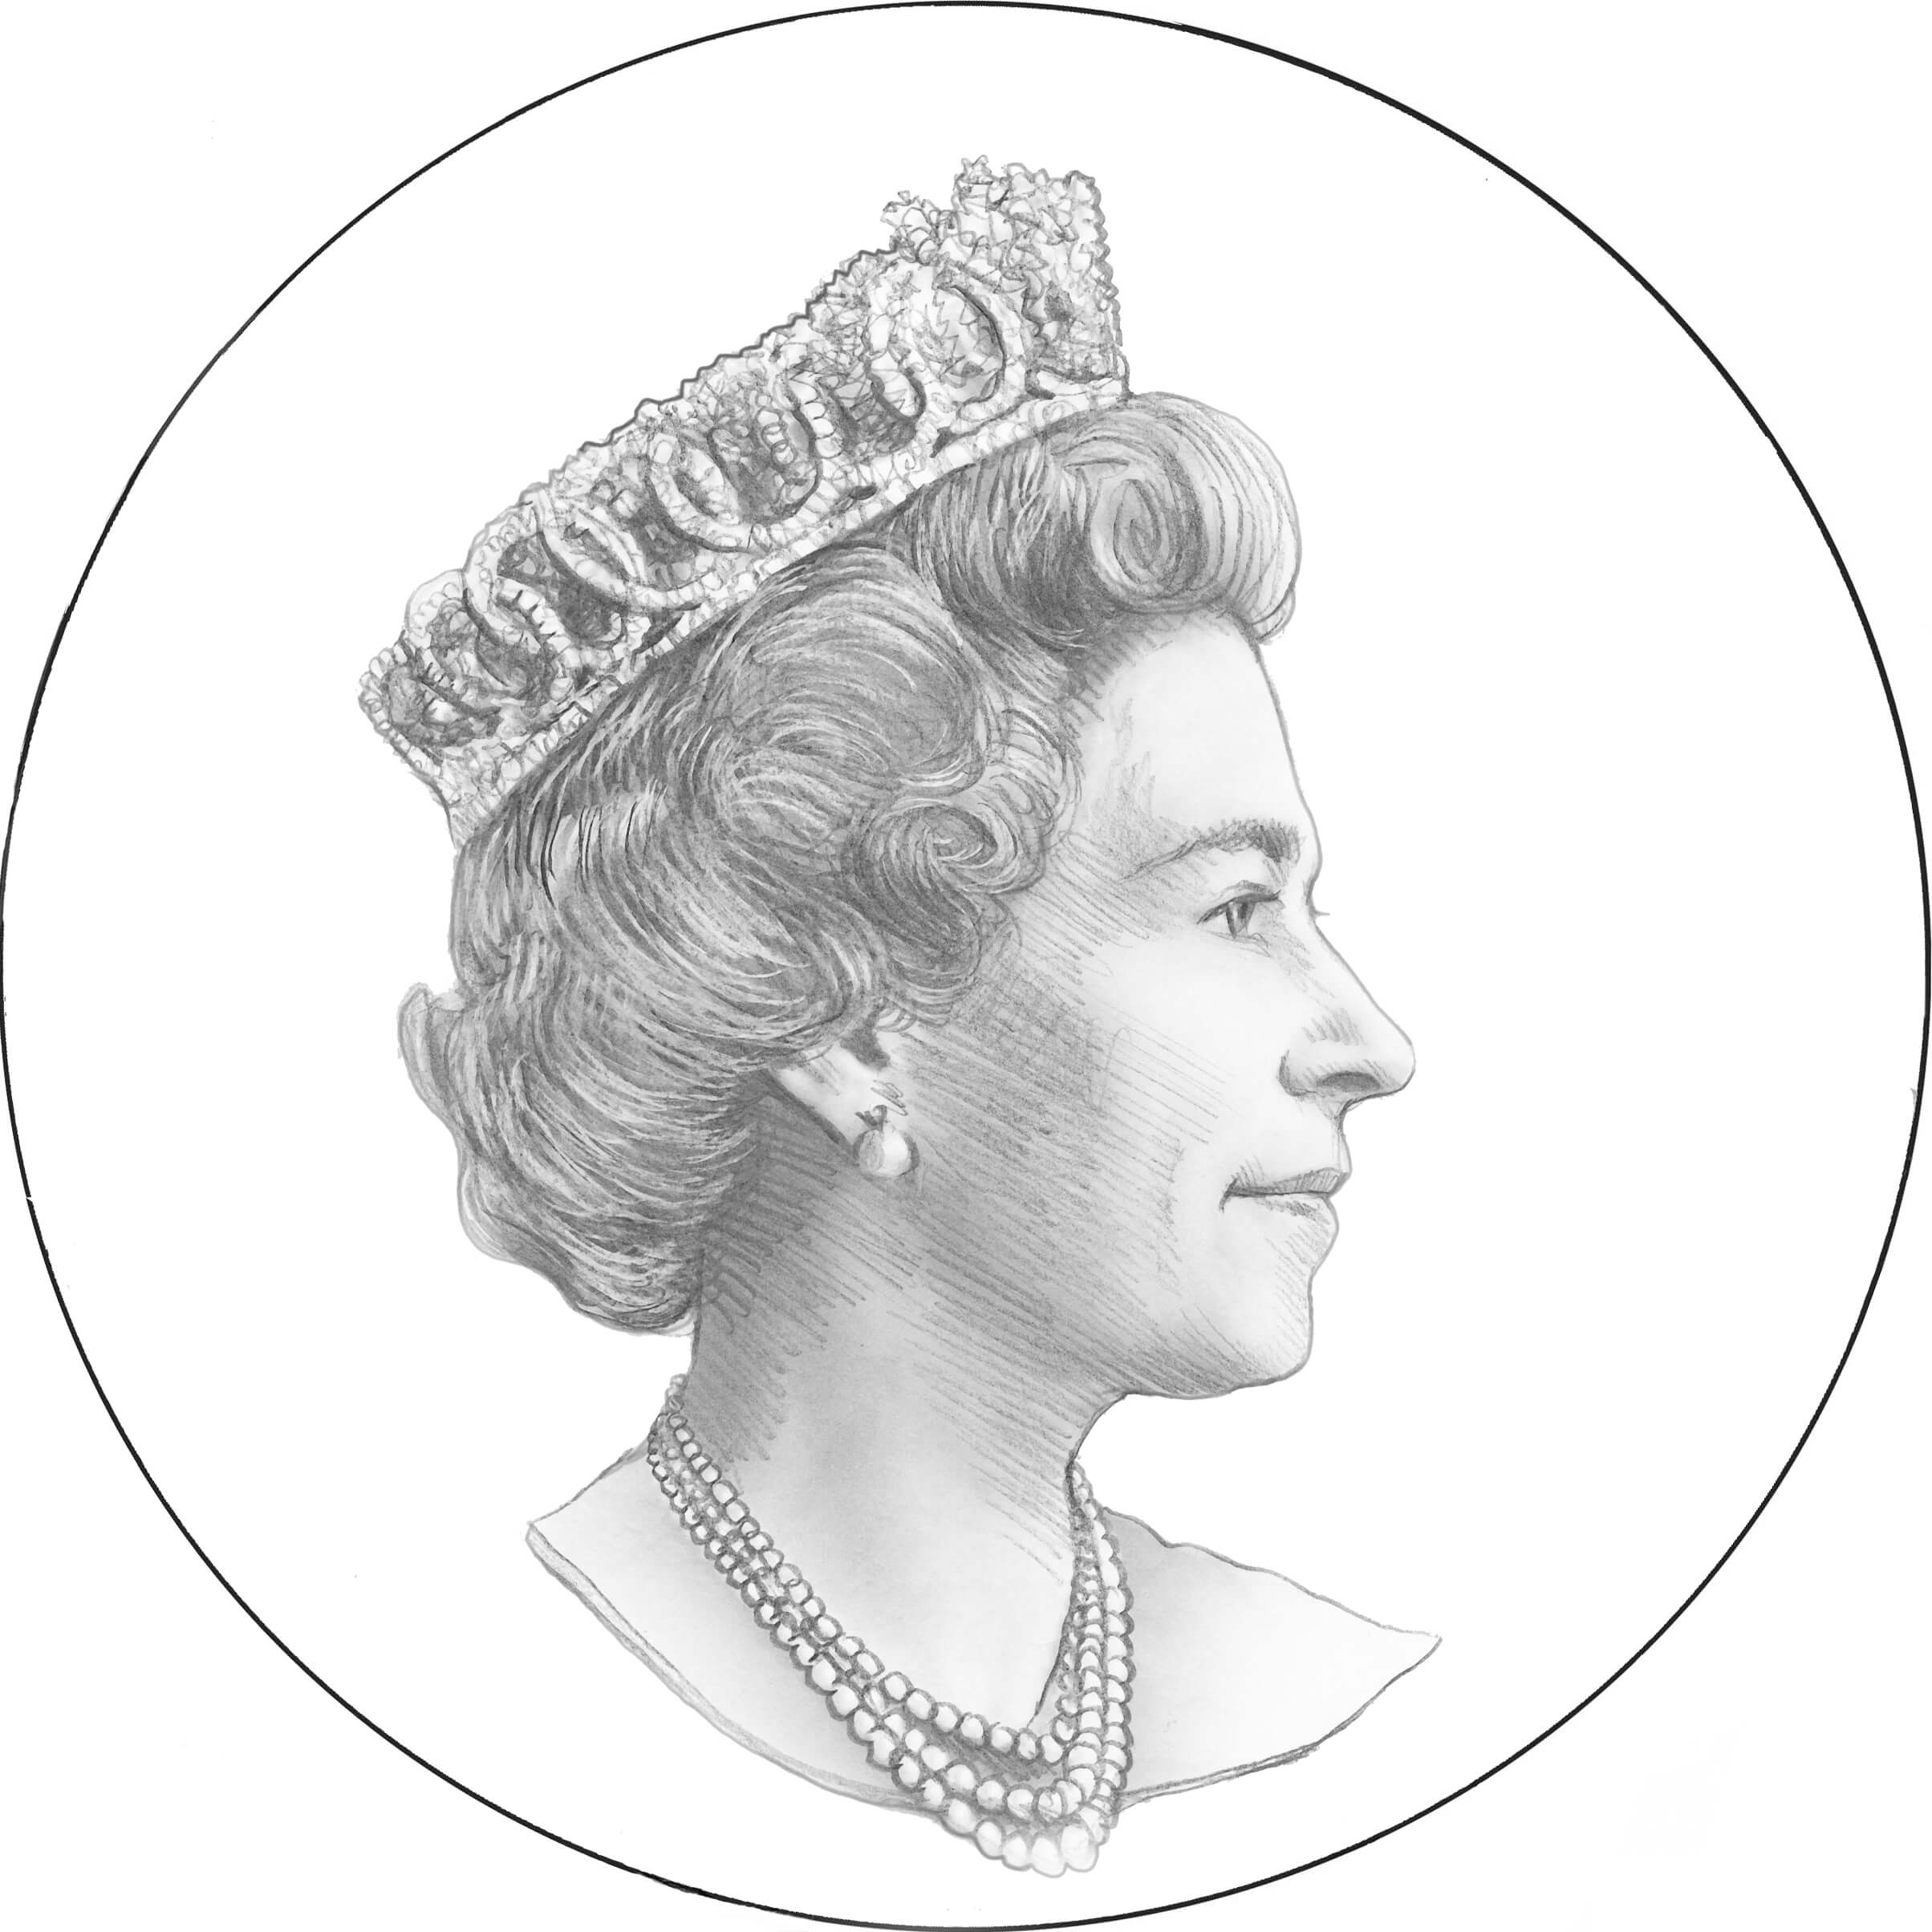 QEII 70s  - The world's longest reigning living monarch — celebrating Queen Elizabeth II's birthday